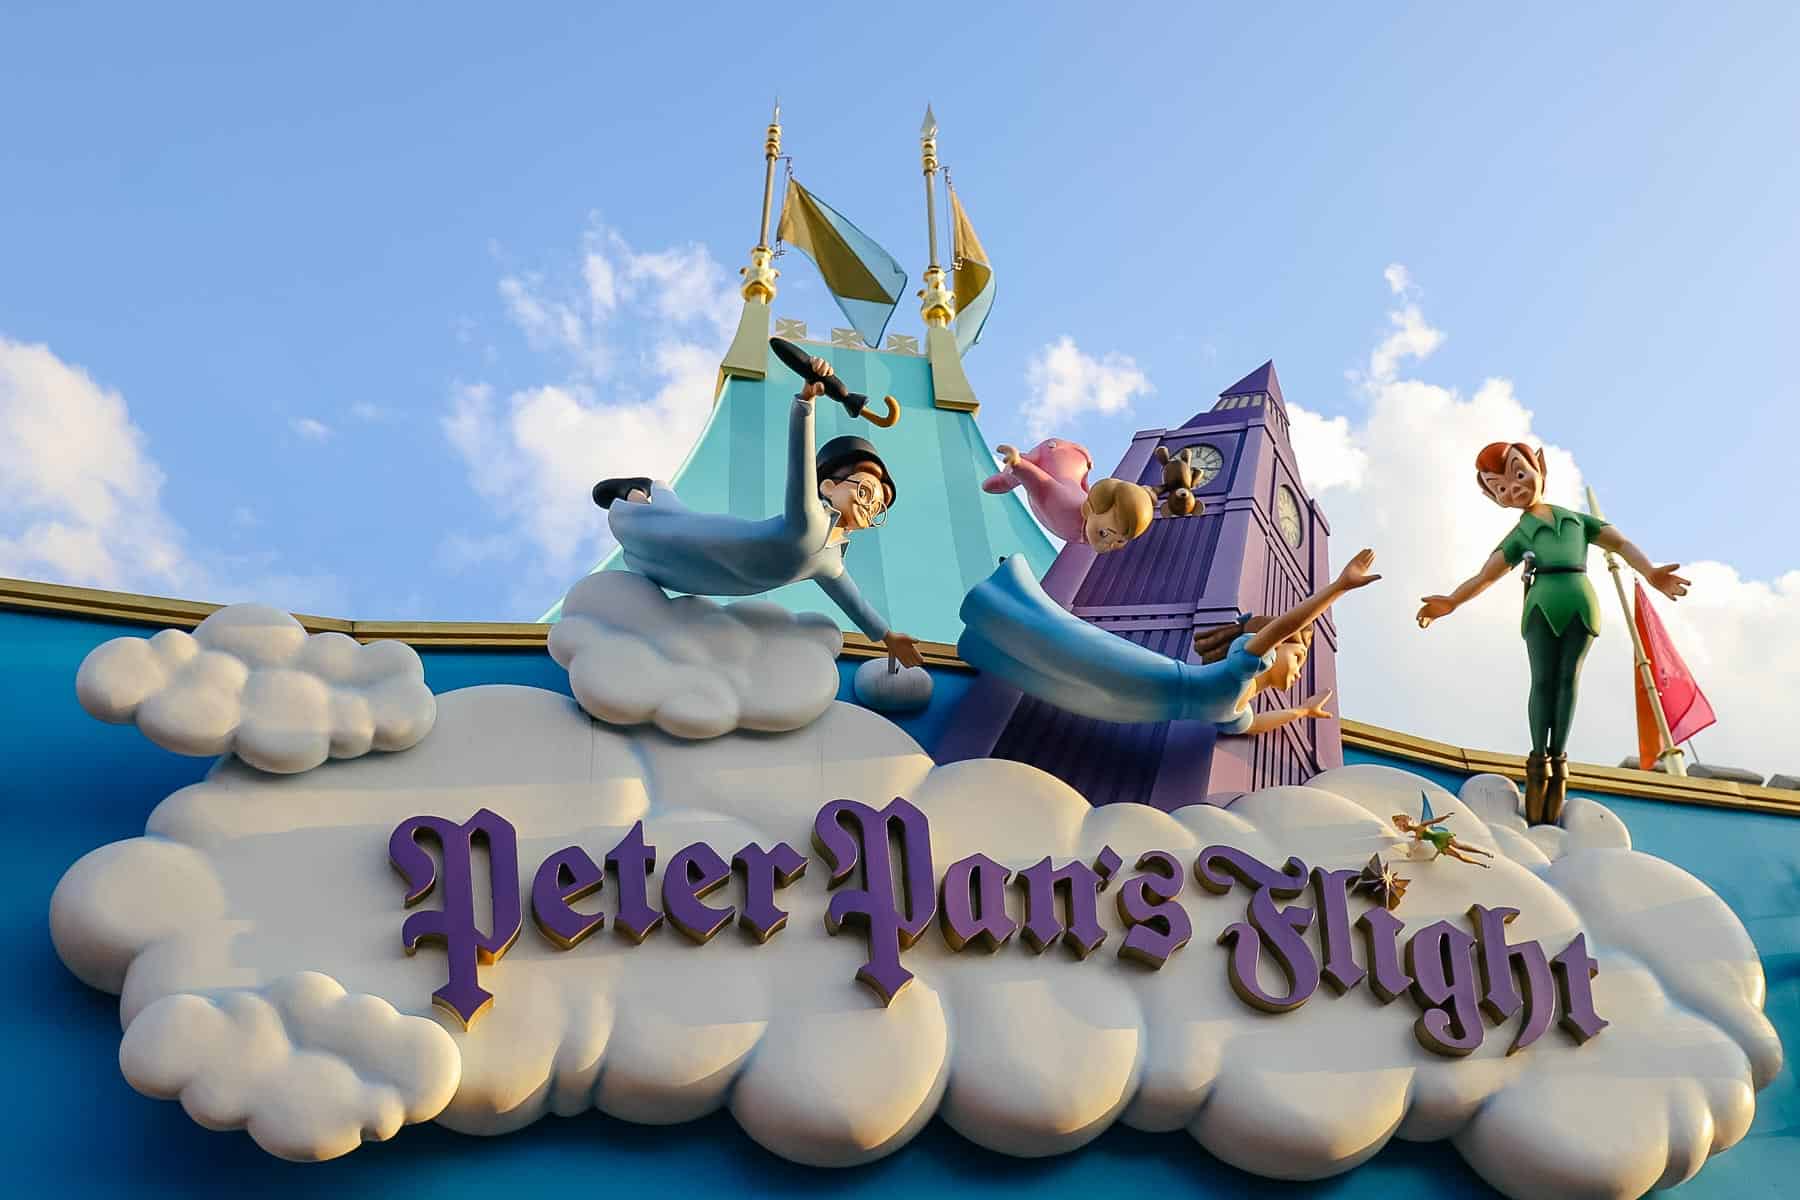 Peter Pan's Flight at Magic Kingdom